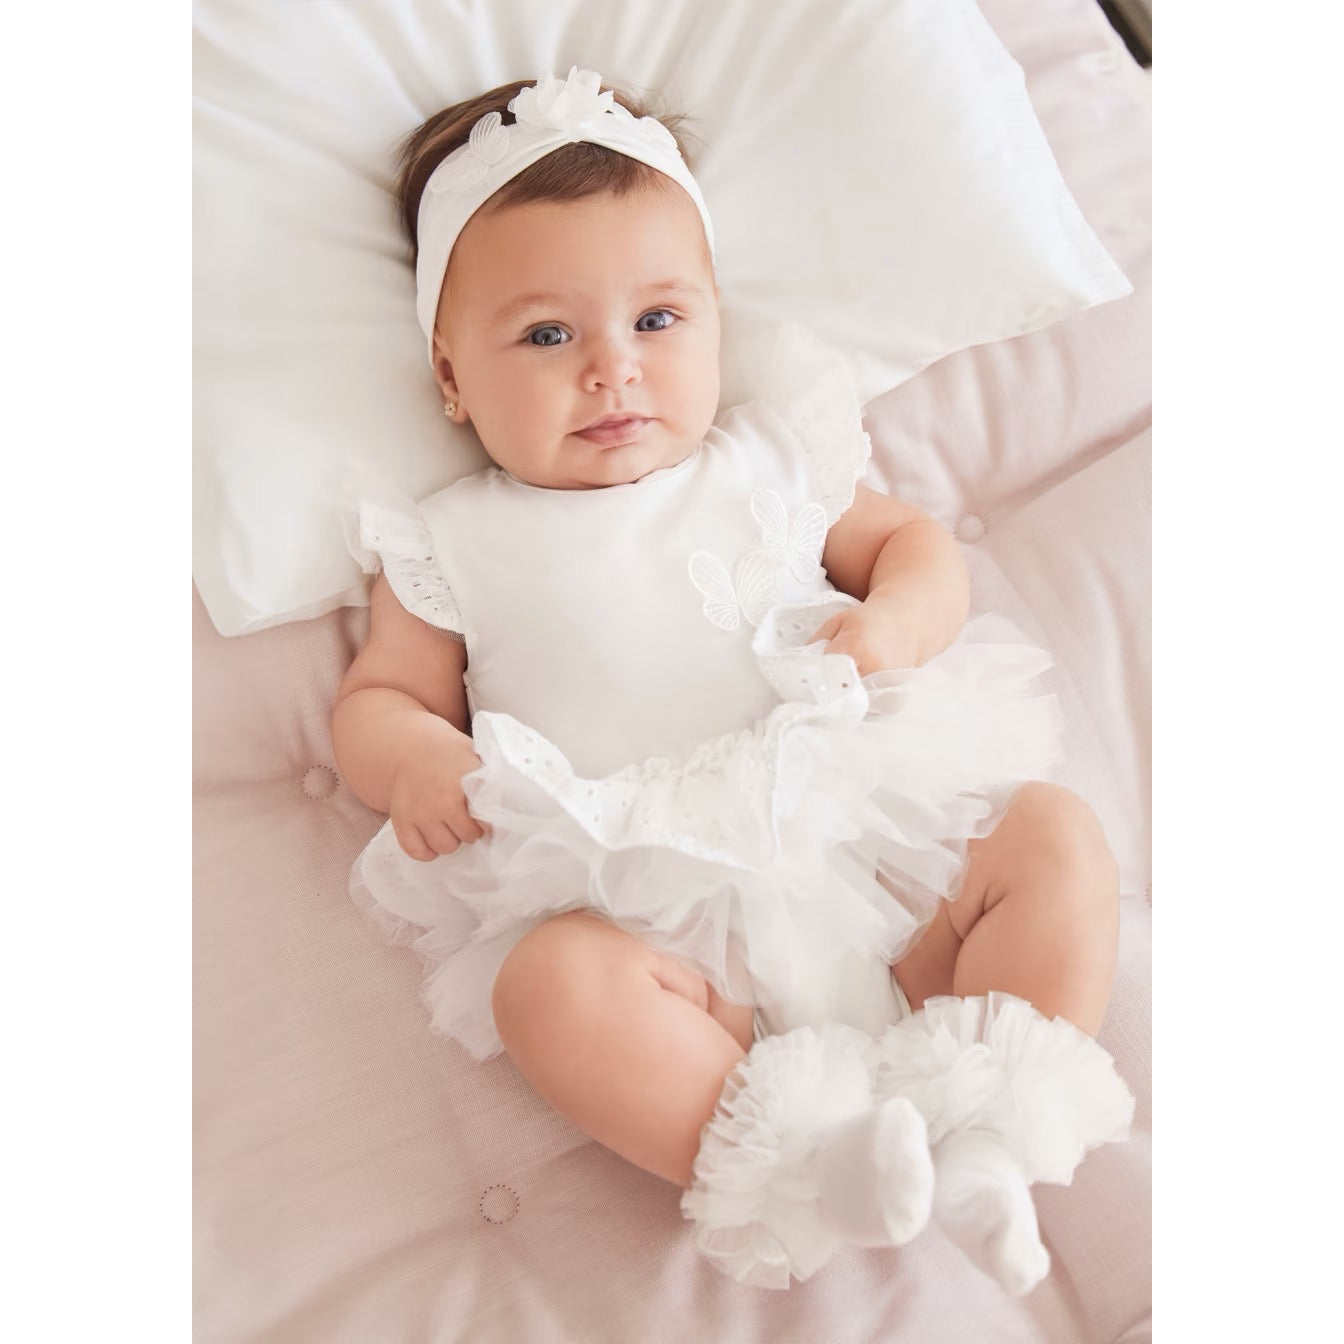 Mayoral Baby Girls Tutu Romper And Headband 1702 White Clothing 2-4M / White,4-6M / White,6-9M / White,12M / White,18M / White